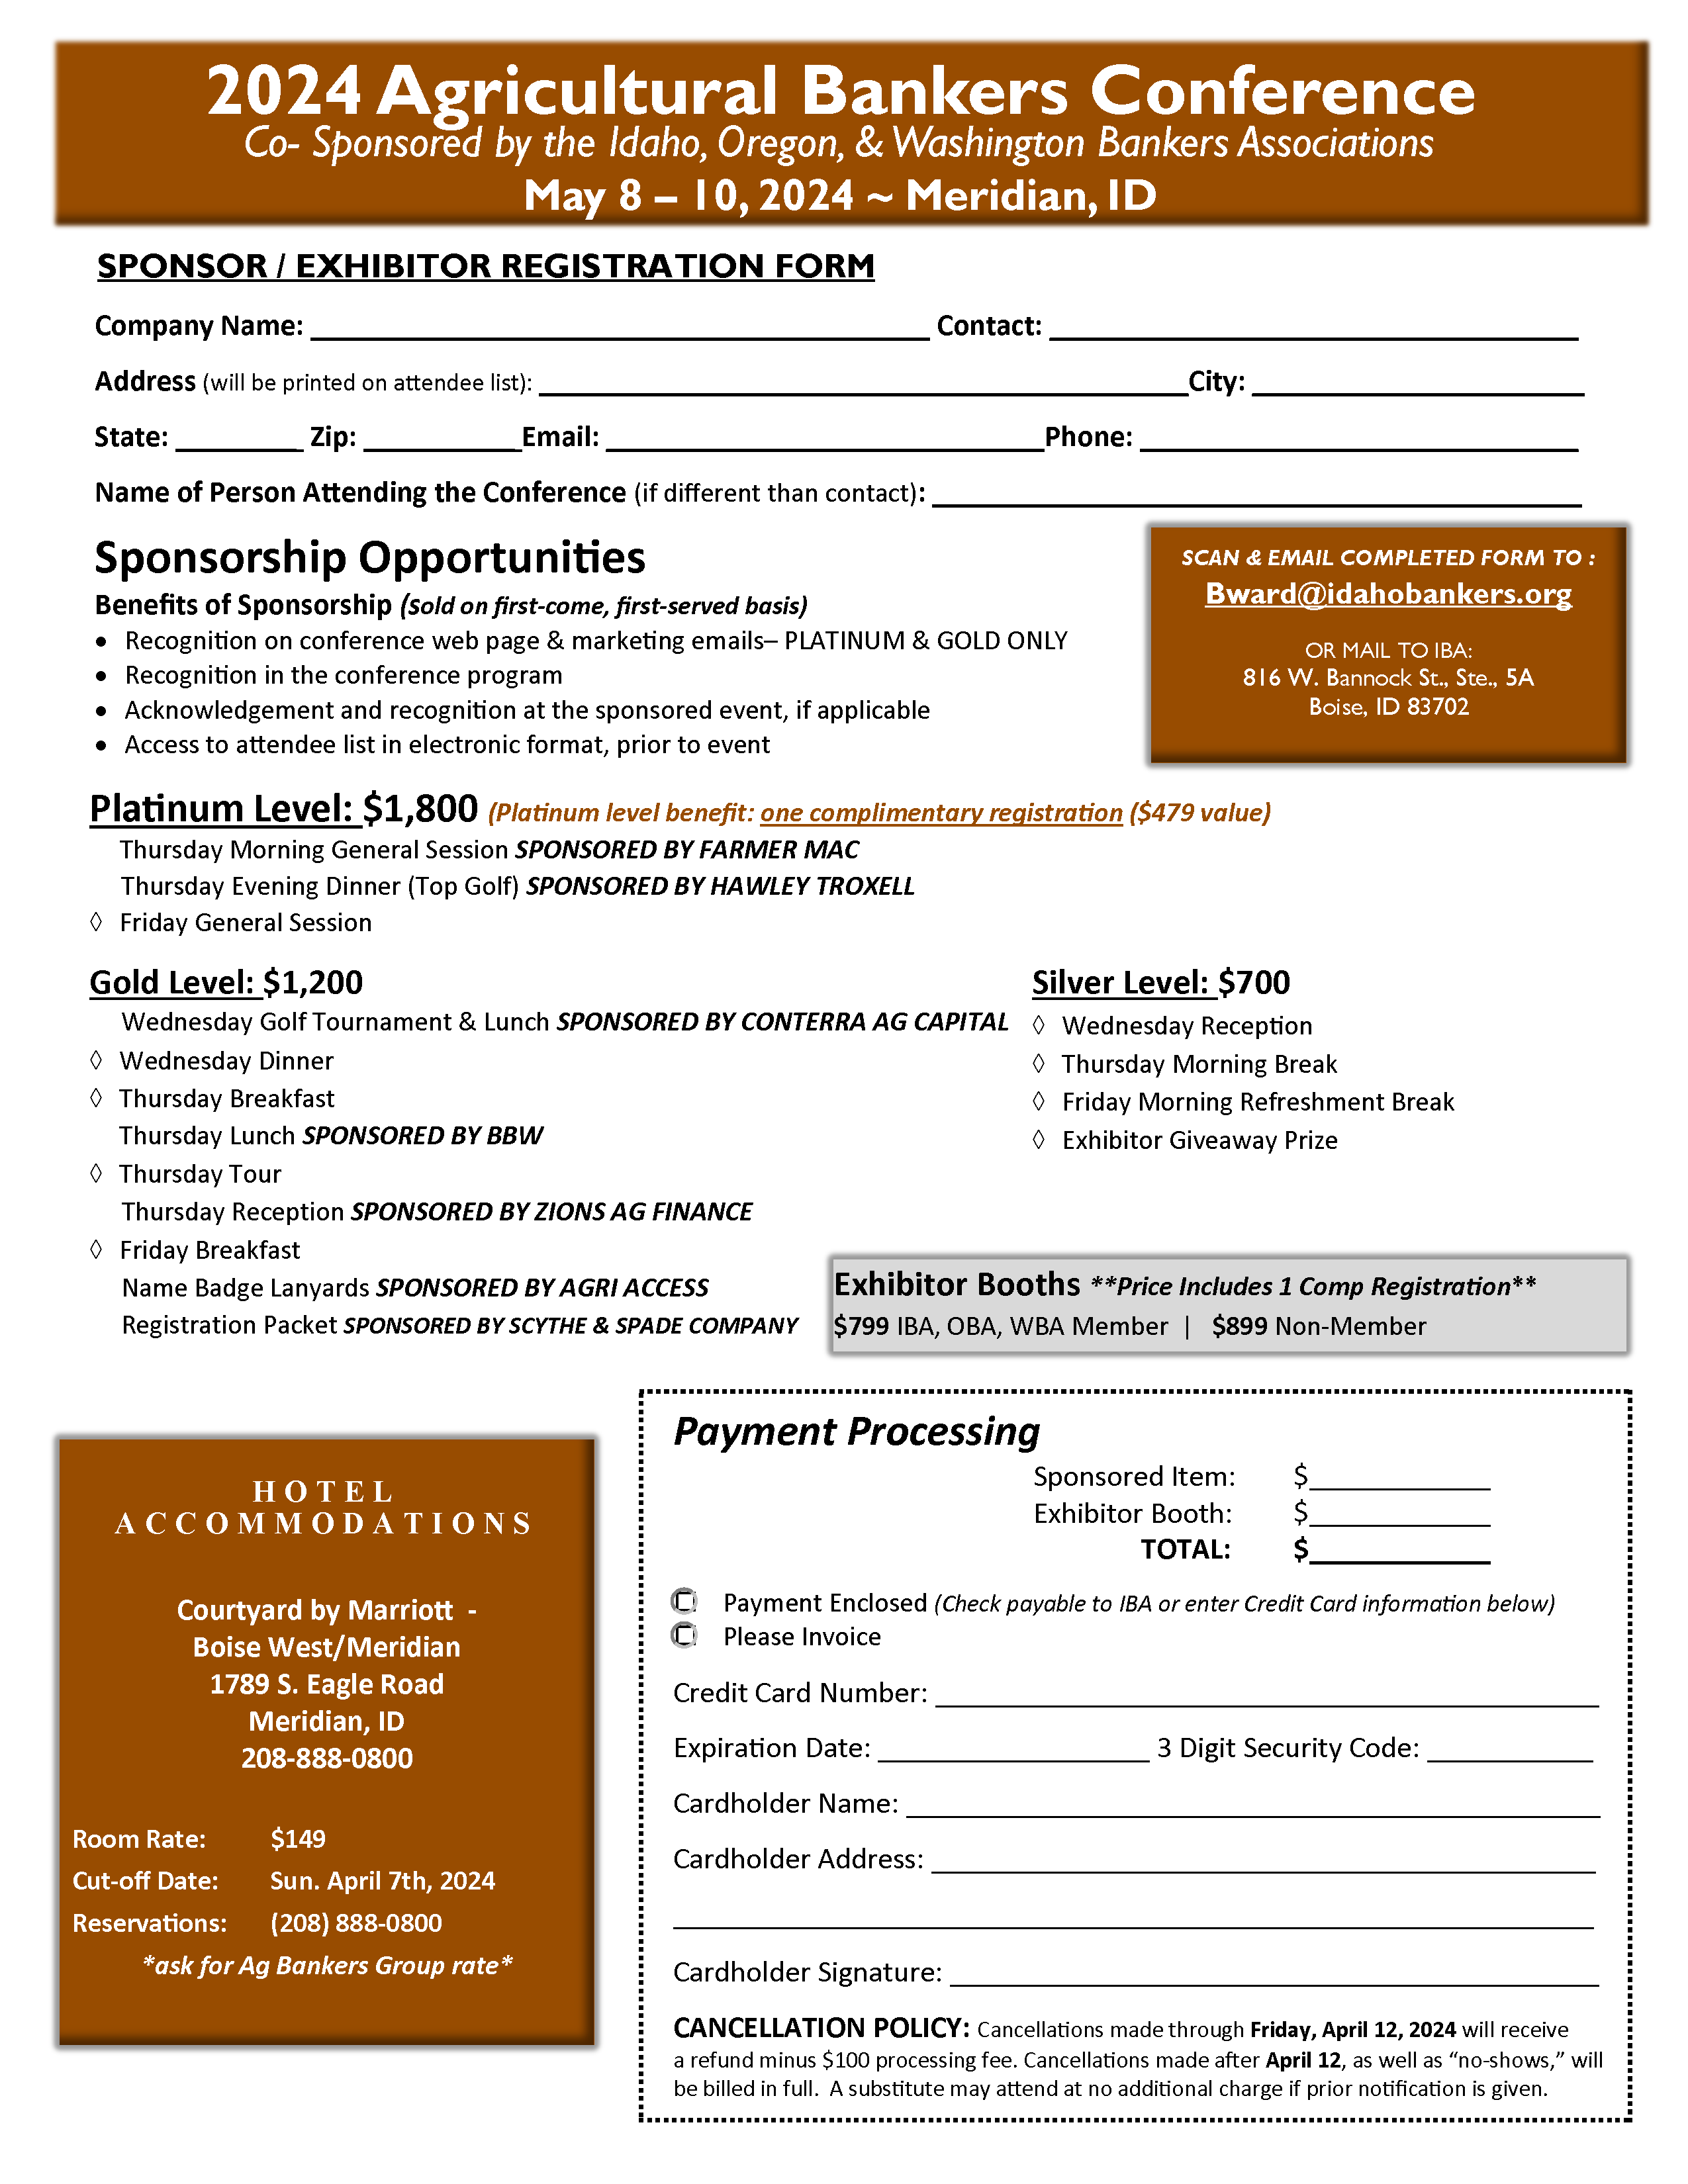 Exhibitor & Sponsor Registration Form